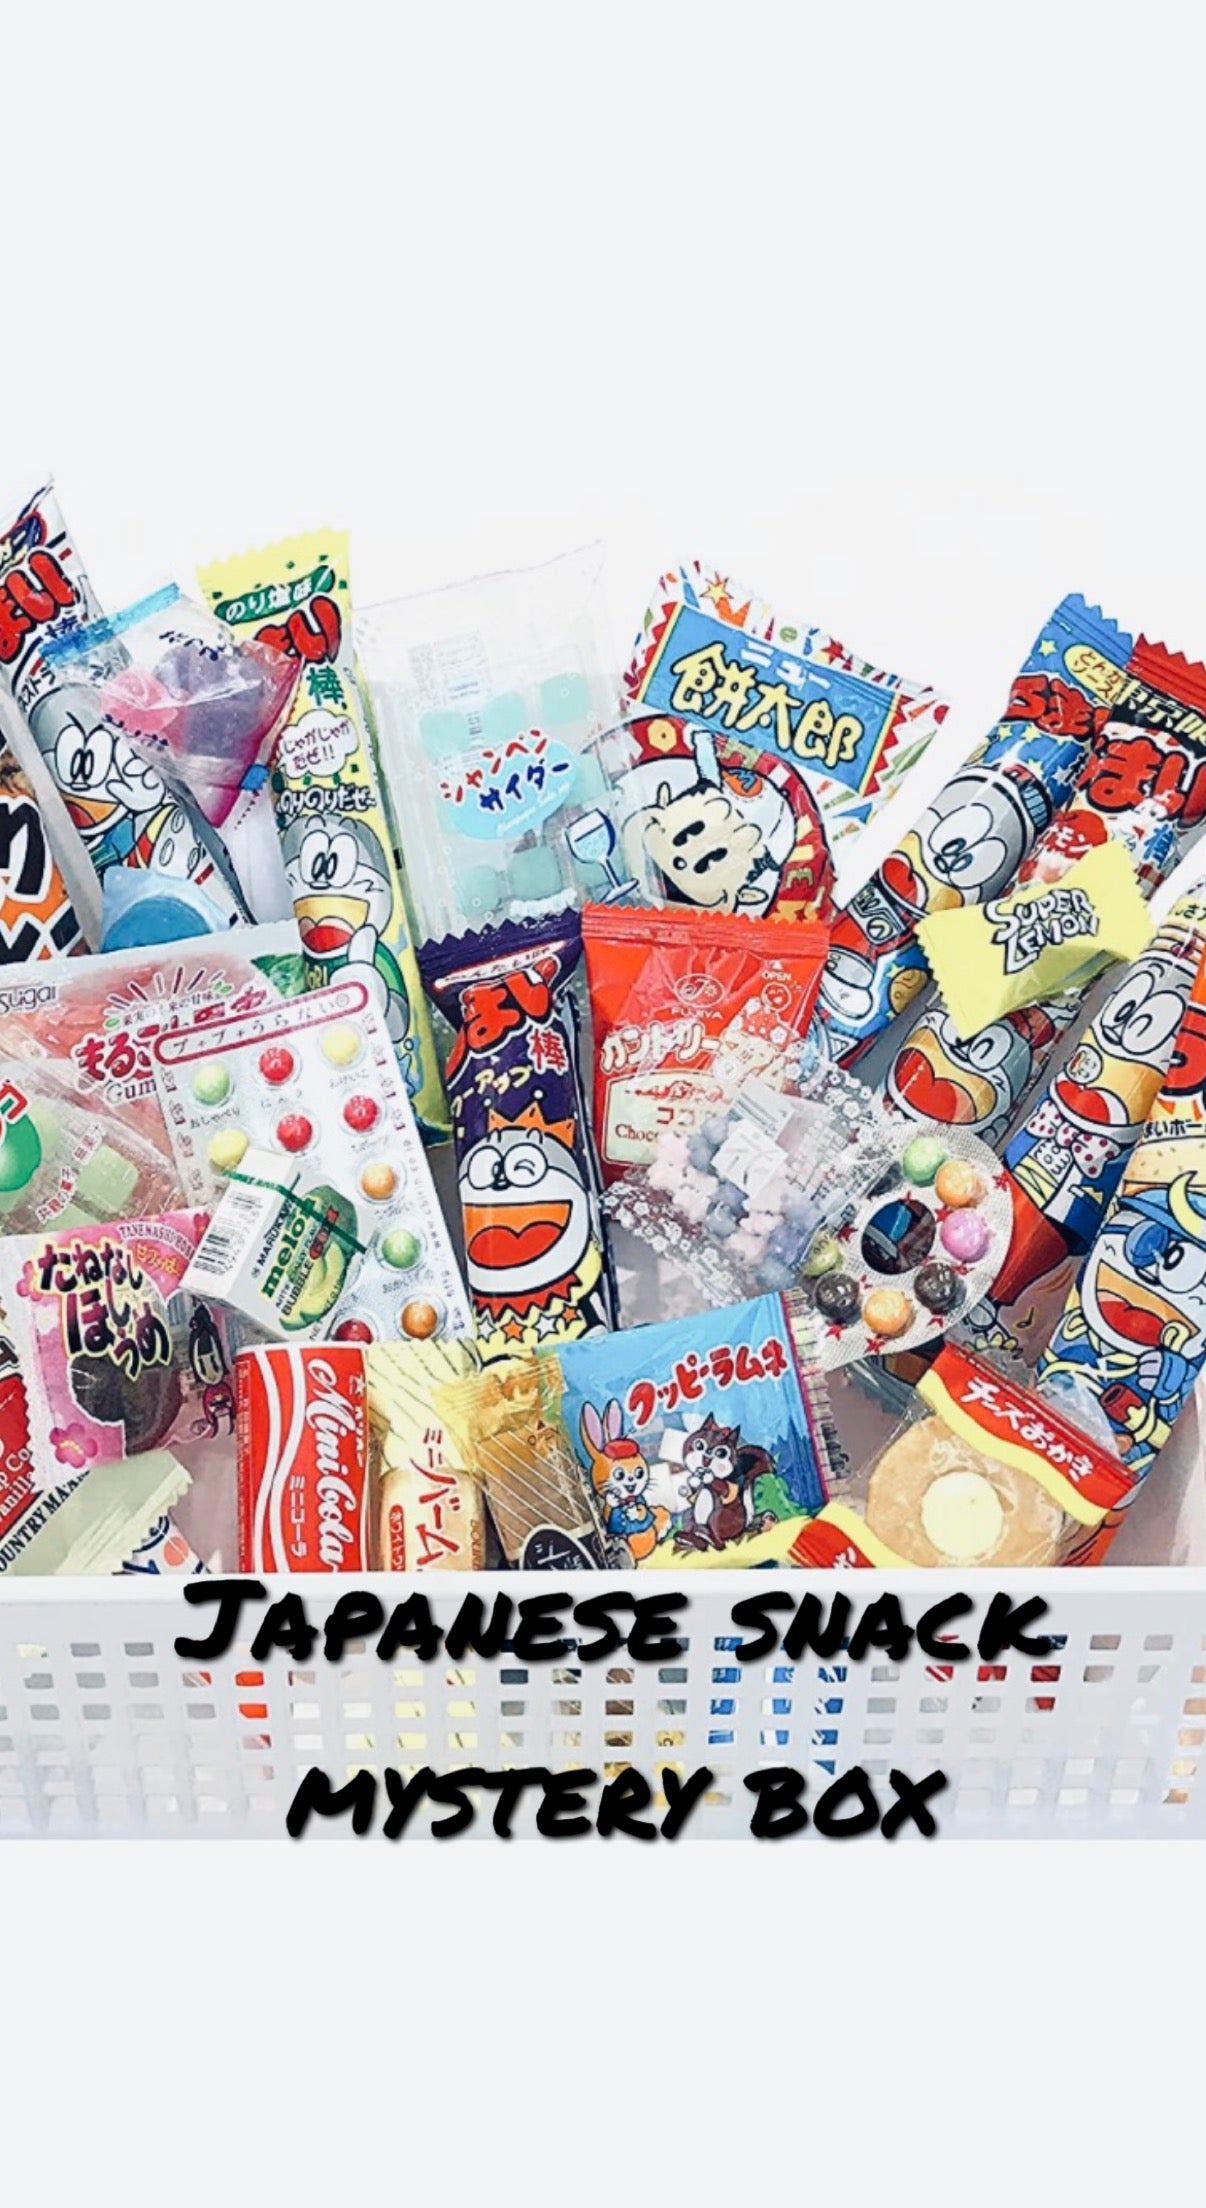 Japanese snack mystery box